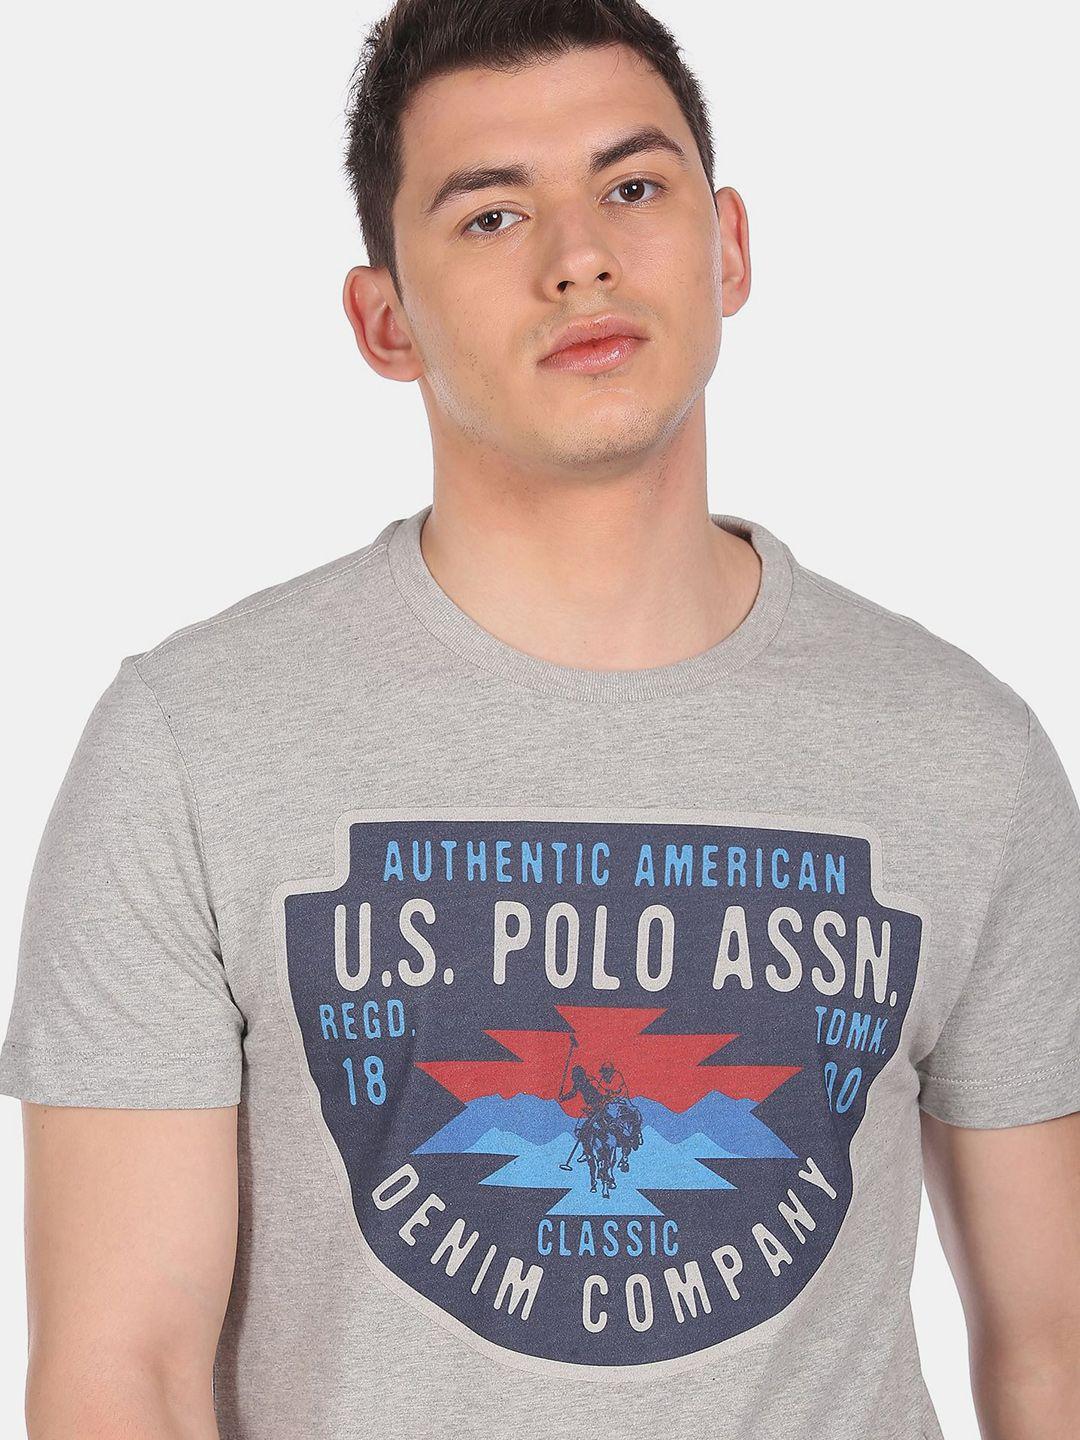 u.s. polo assn. denim co.men grey typography printed t-shirt